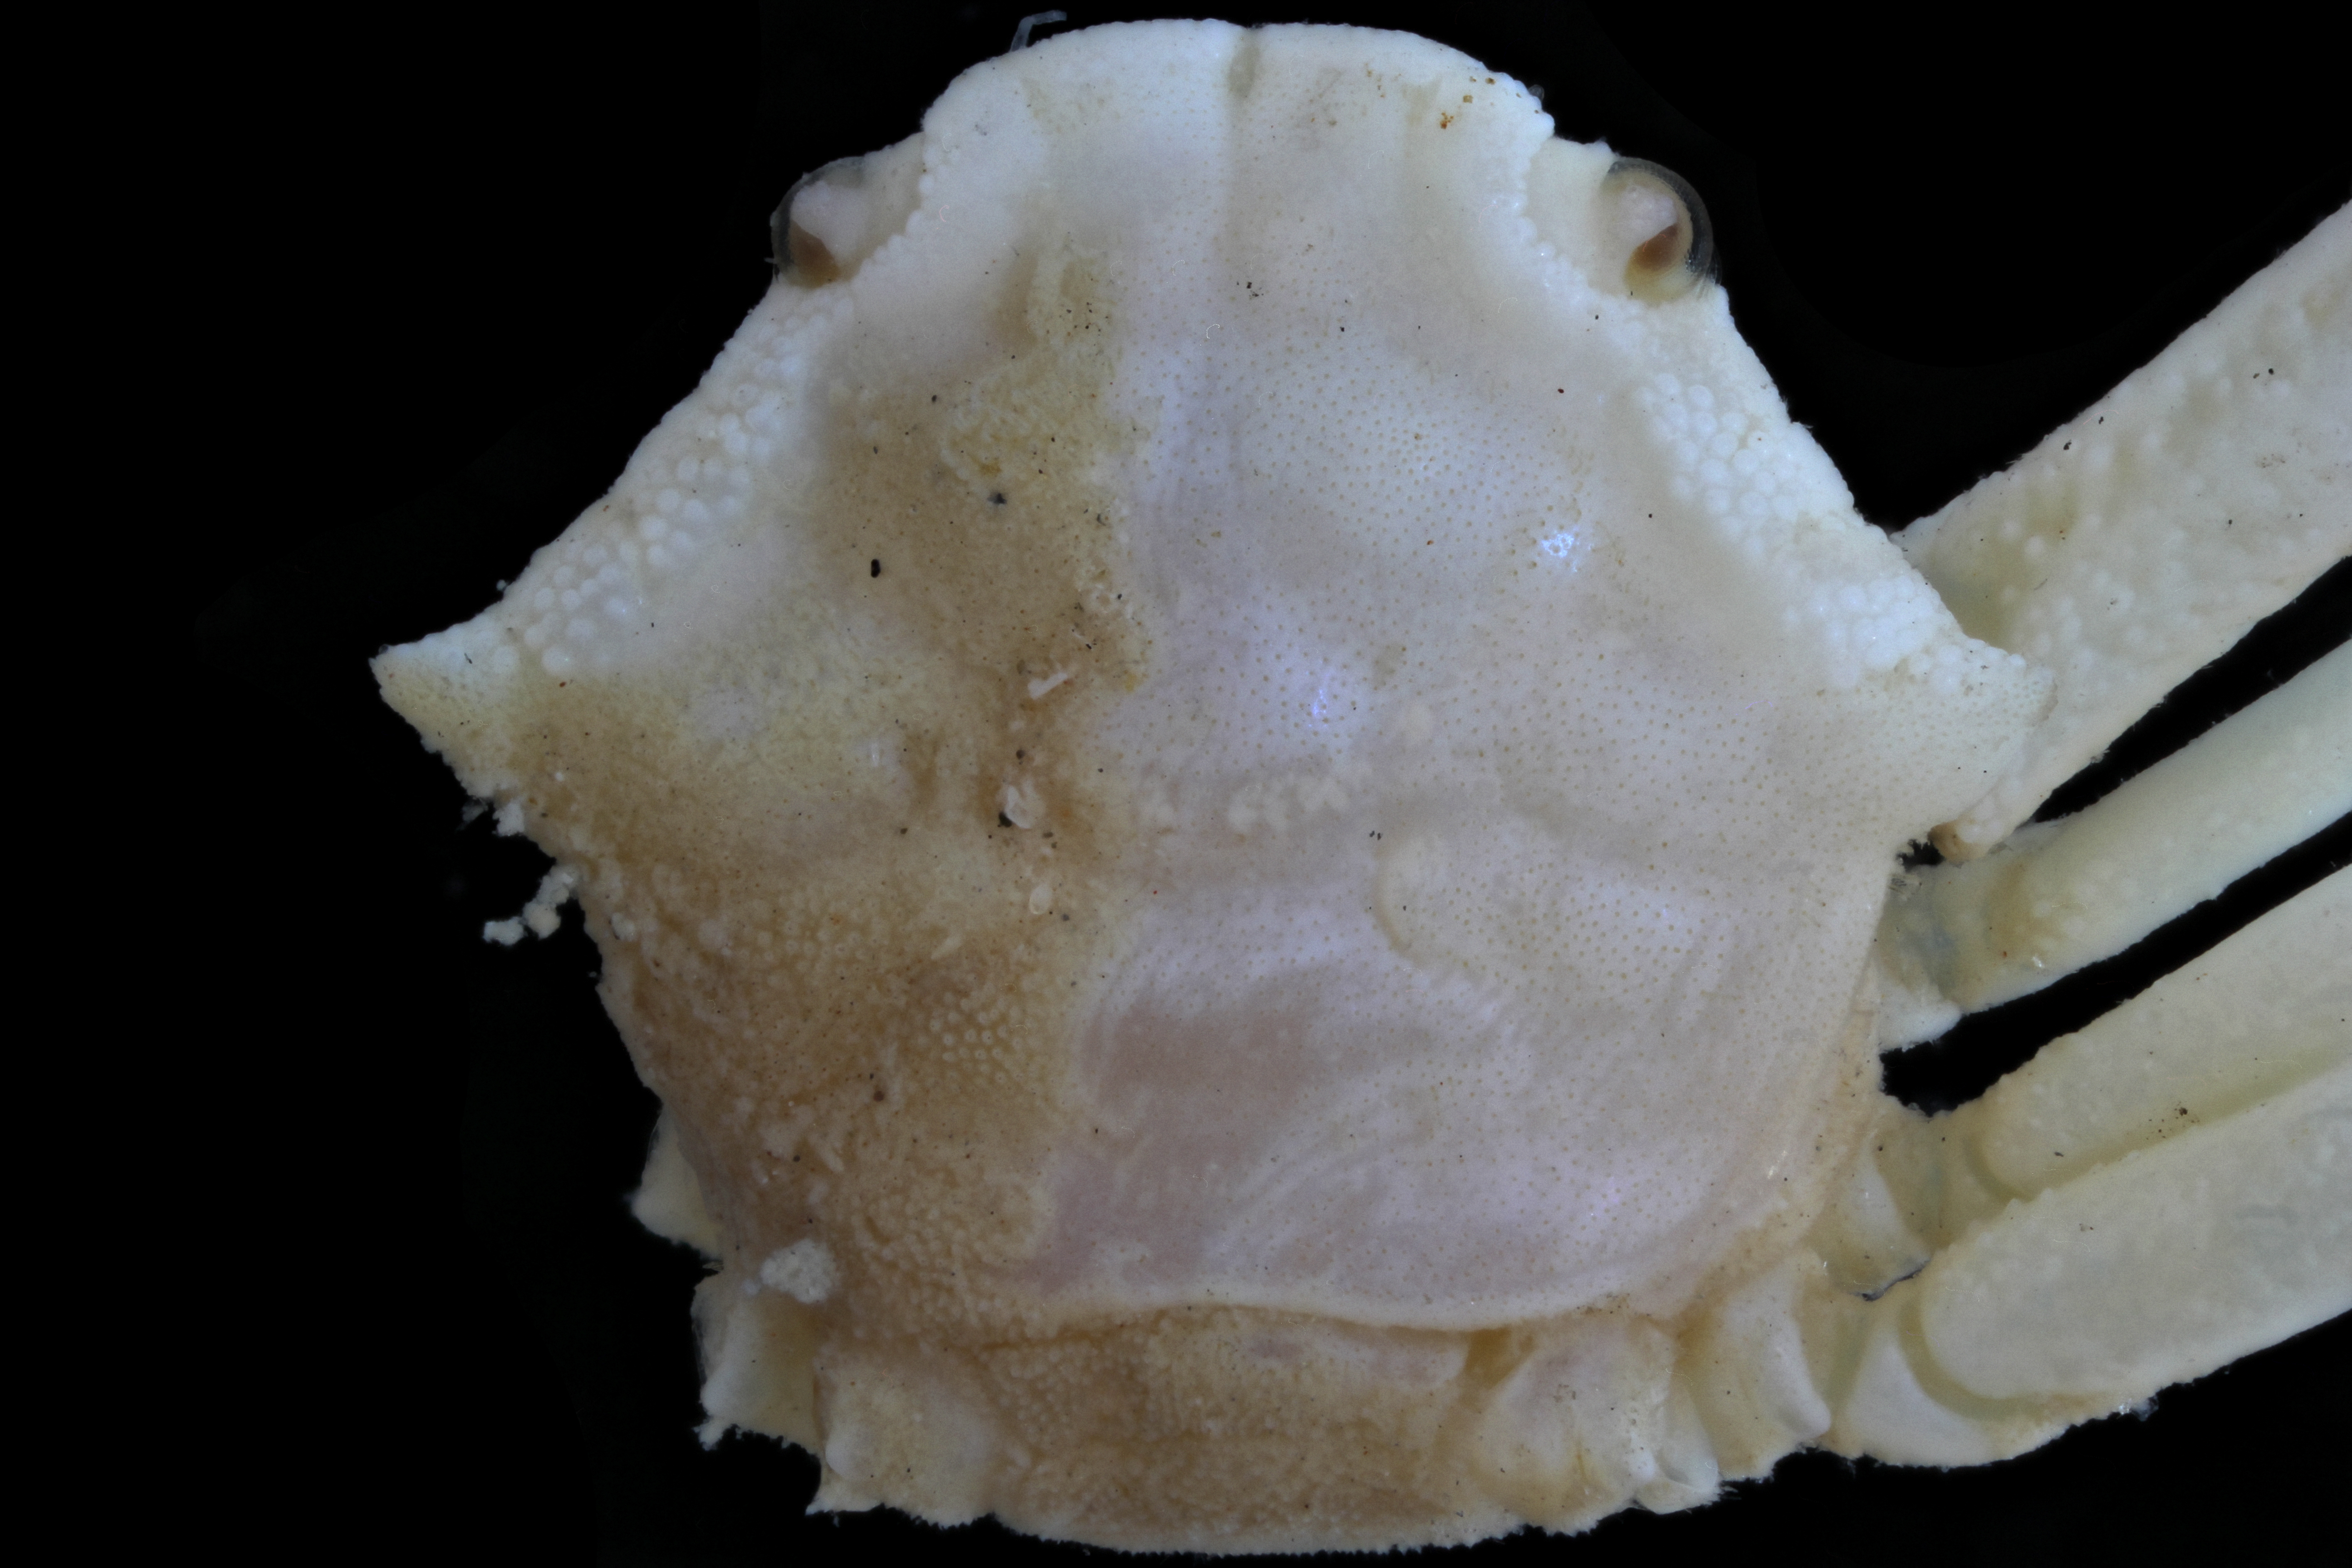 Permanotus purpureus (Gordon, 1934) - cephalothorax in dorsal view.